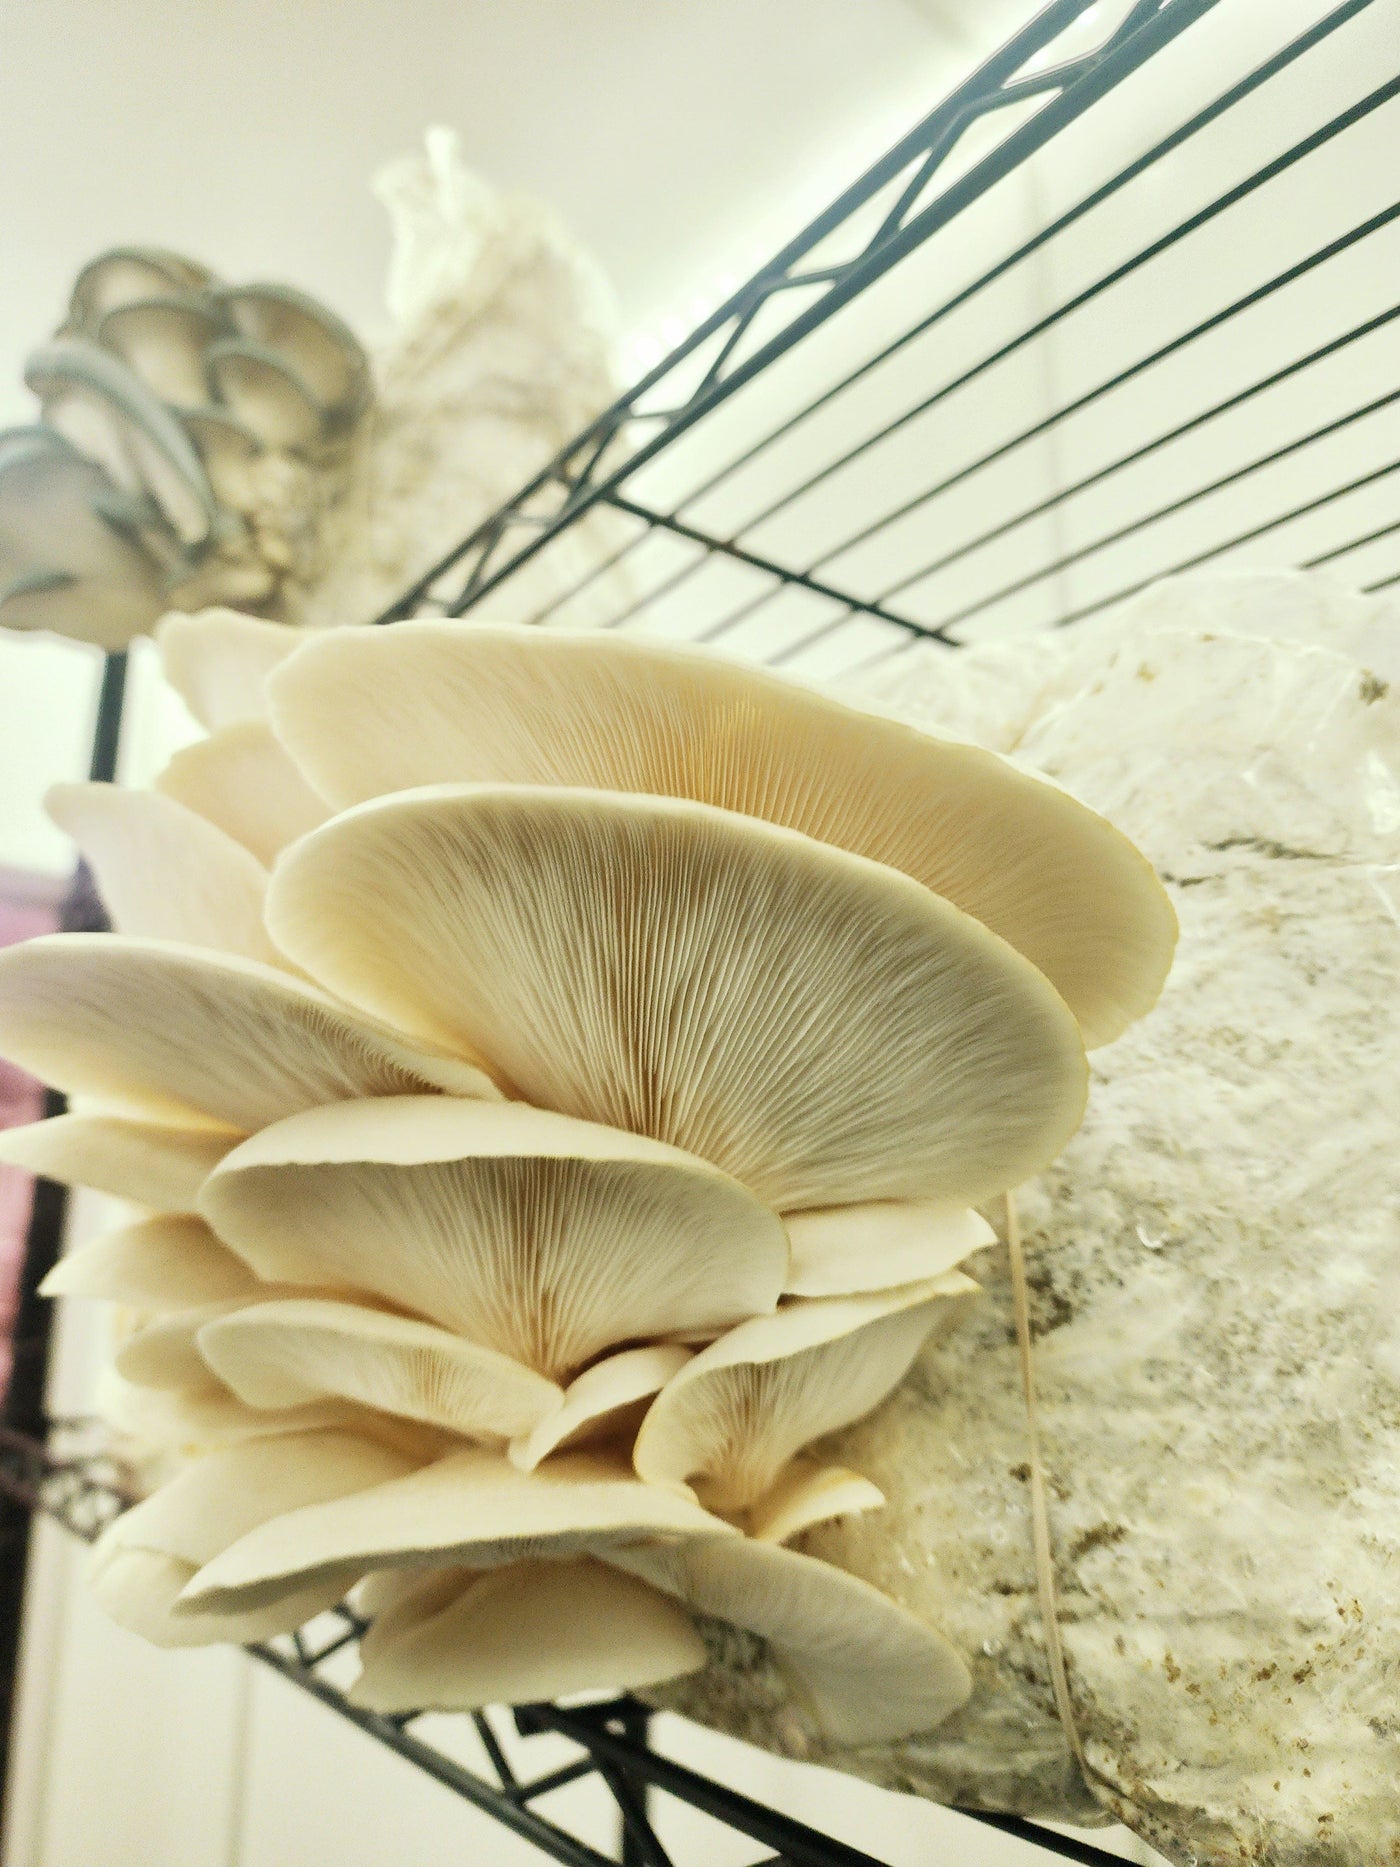 Elm Oyster Mushrooms - The CAPN's Mushroom Company